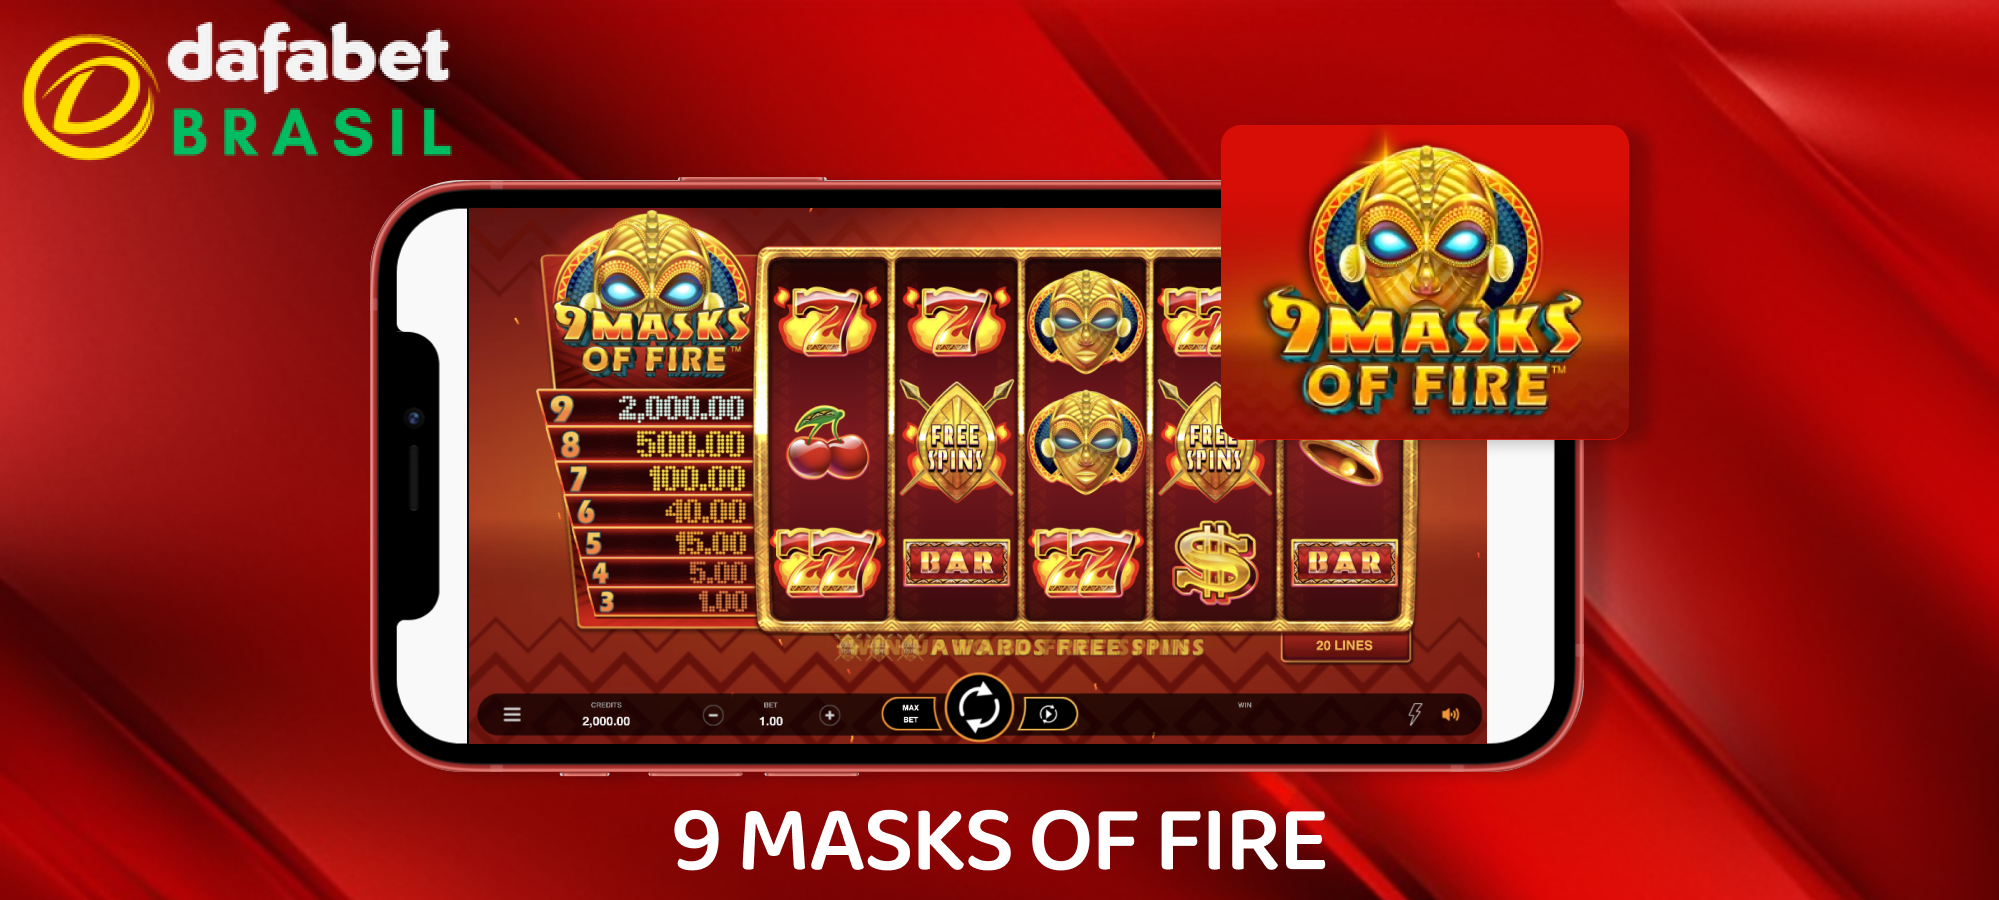 Jogue 9 Masks of Fire no Dafabet Brasil